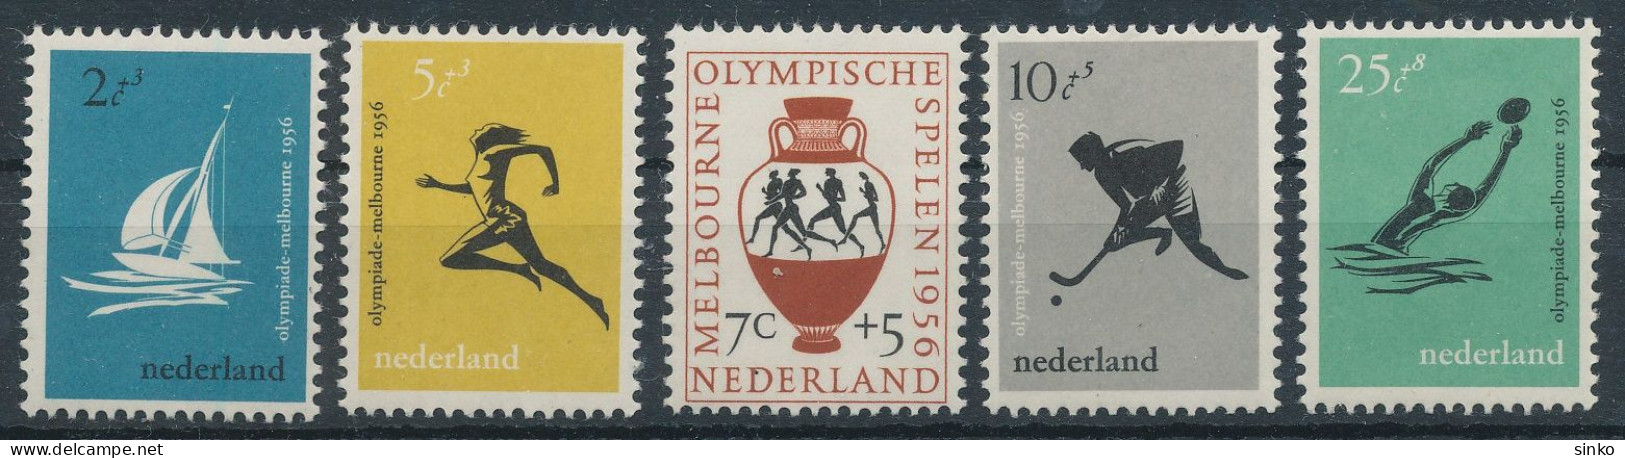 1956. Netherlands - Olympics - Sommer 1956: Melbourne